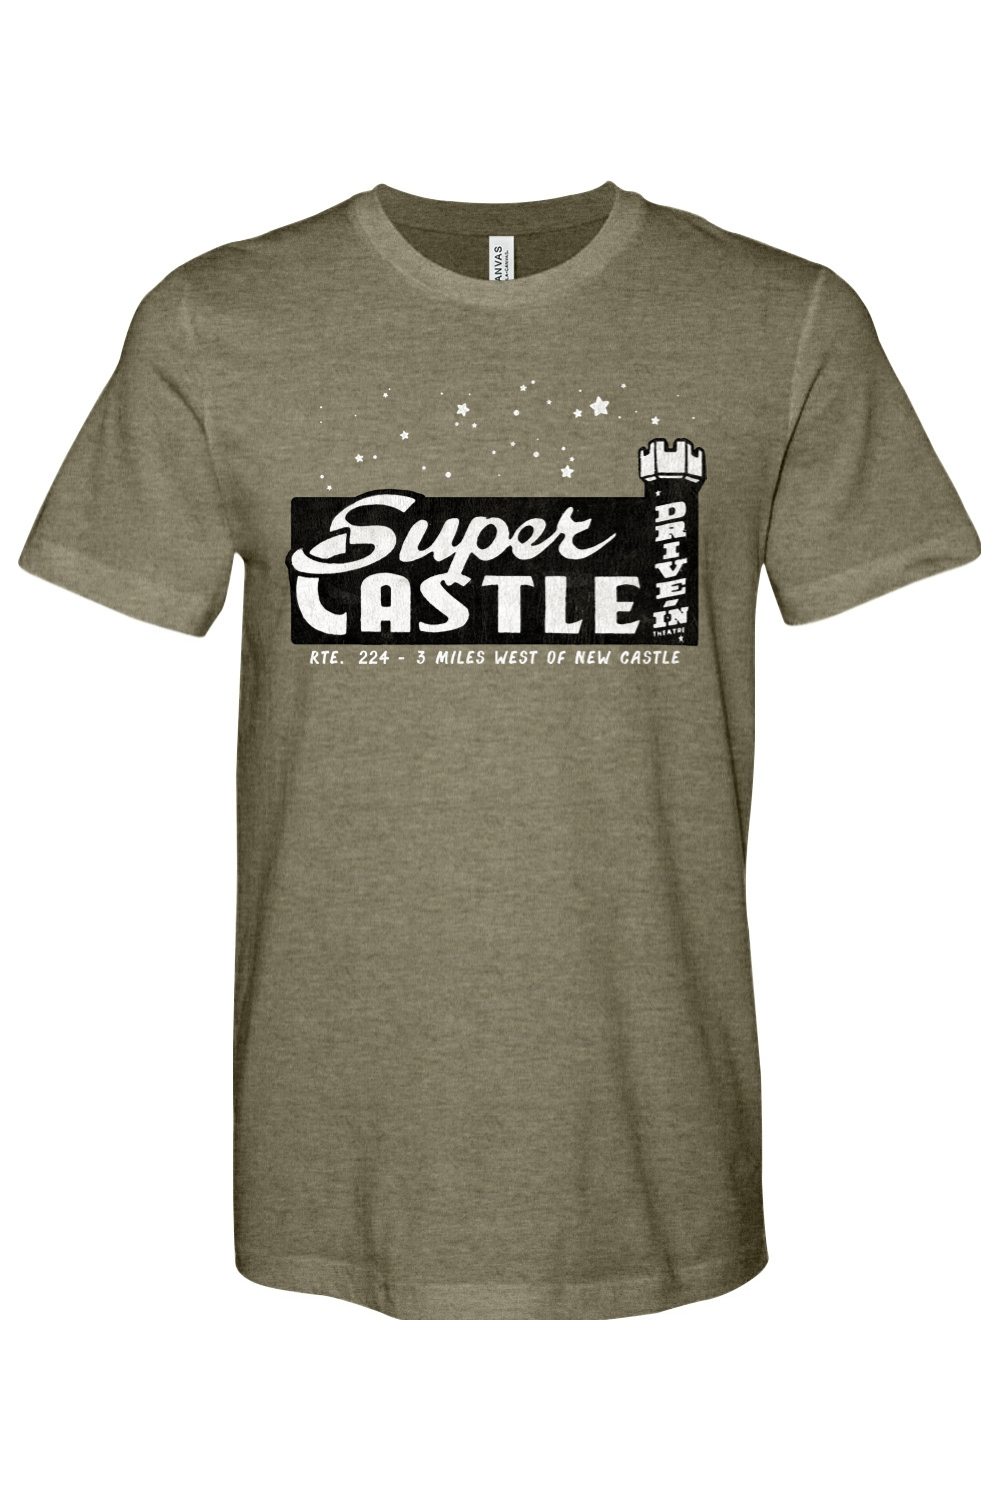 Super Castle Drive-In - New Castle, PA - Yinzylvania